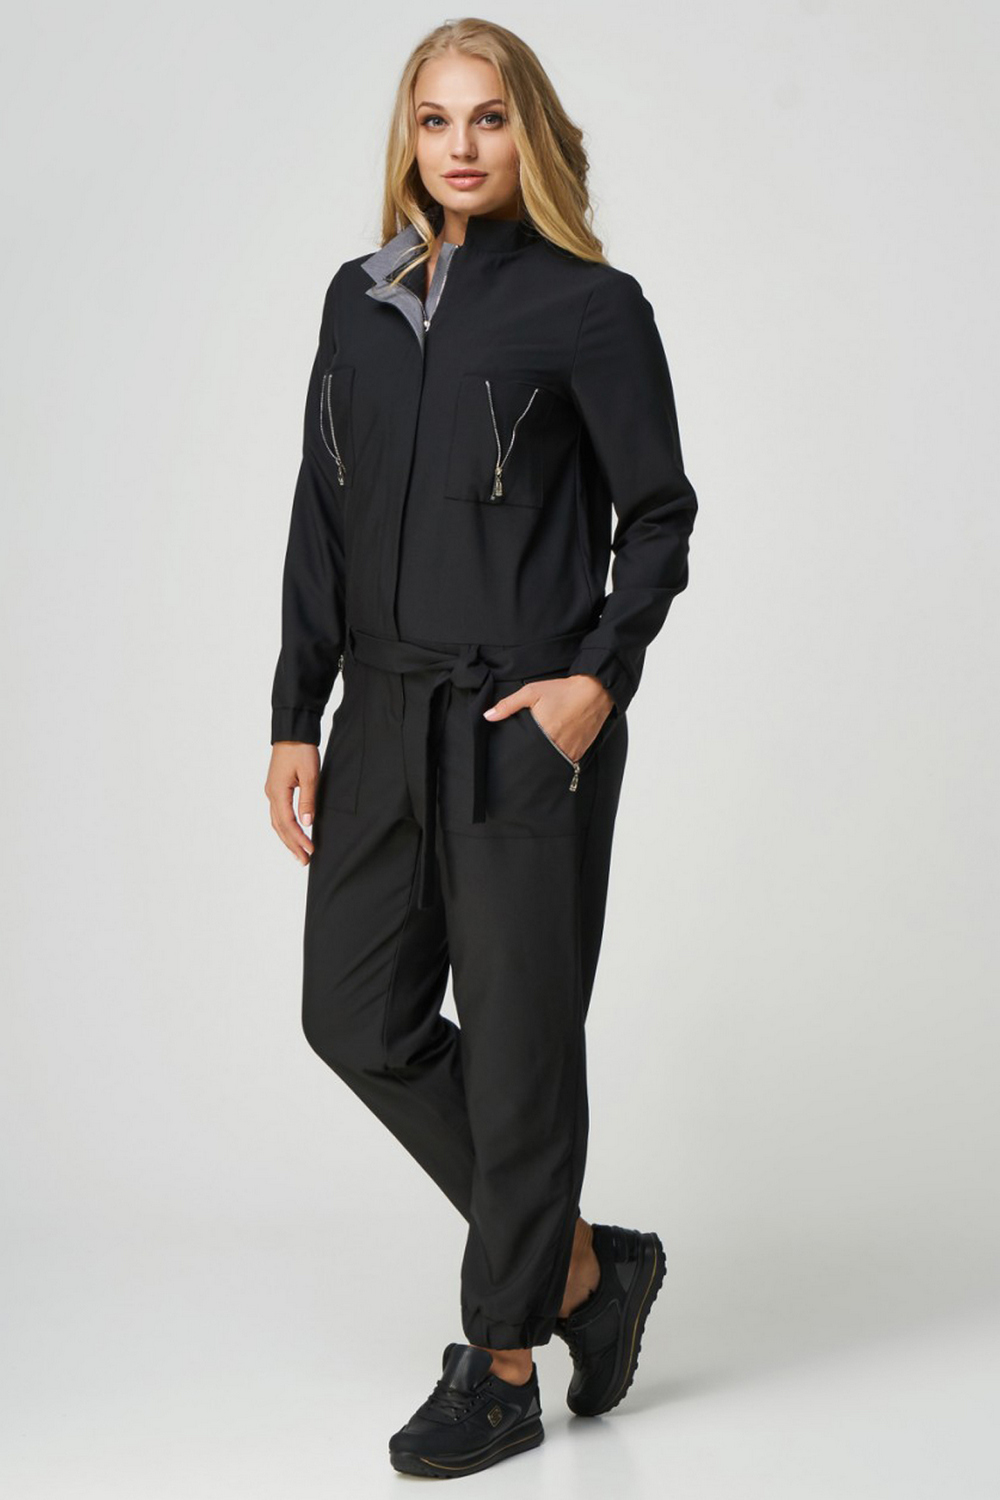 Buy Black women`s overalls with metal zipper, Long sleeve pilot style suit for ladies